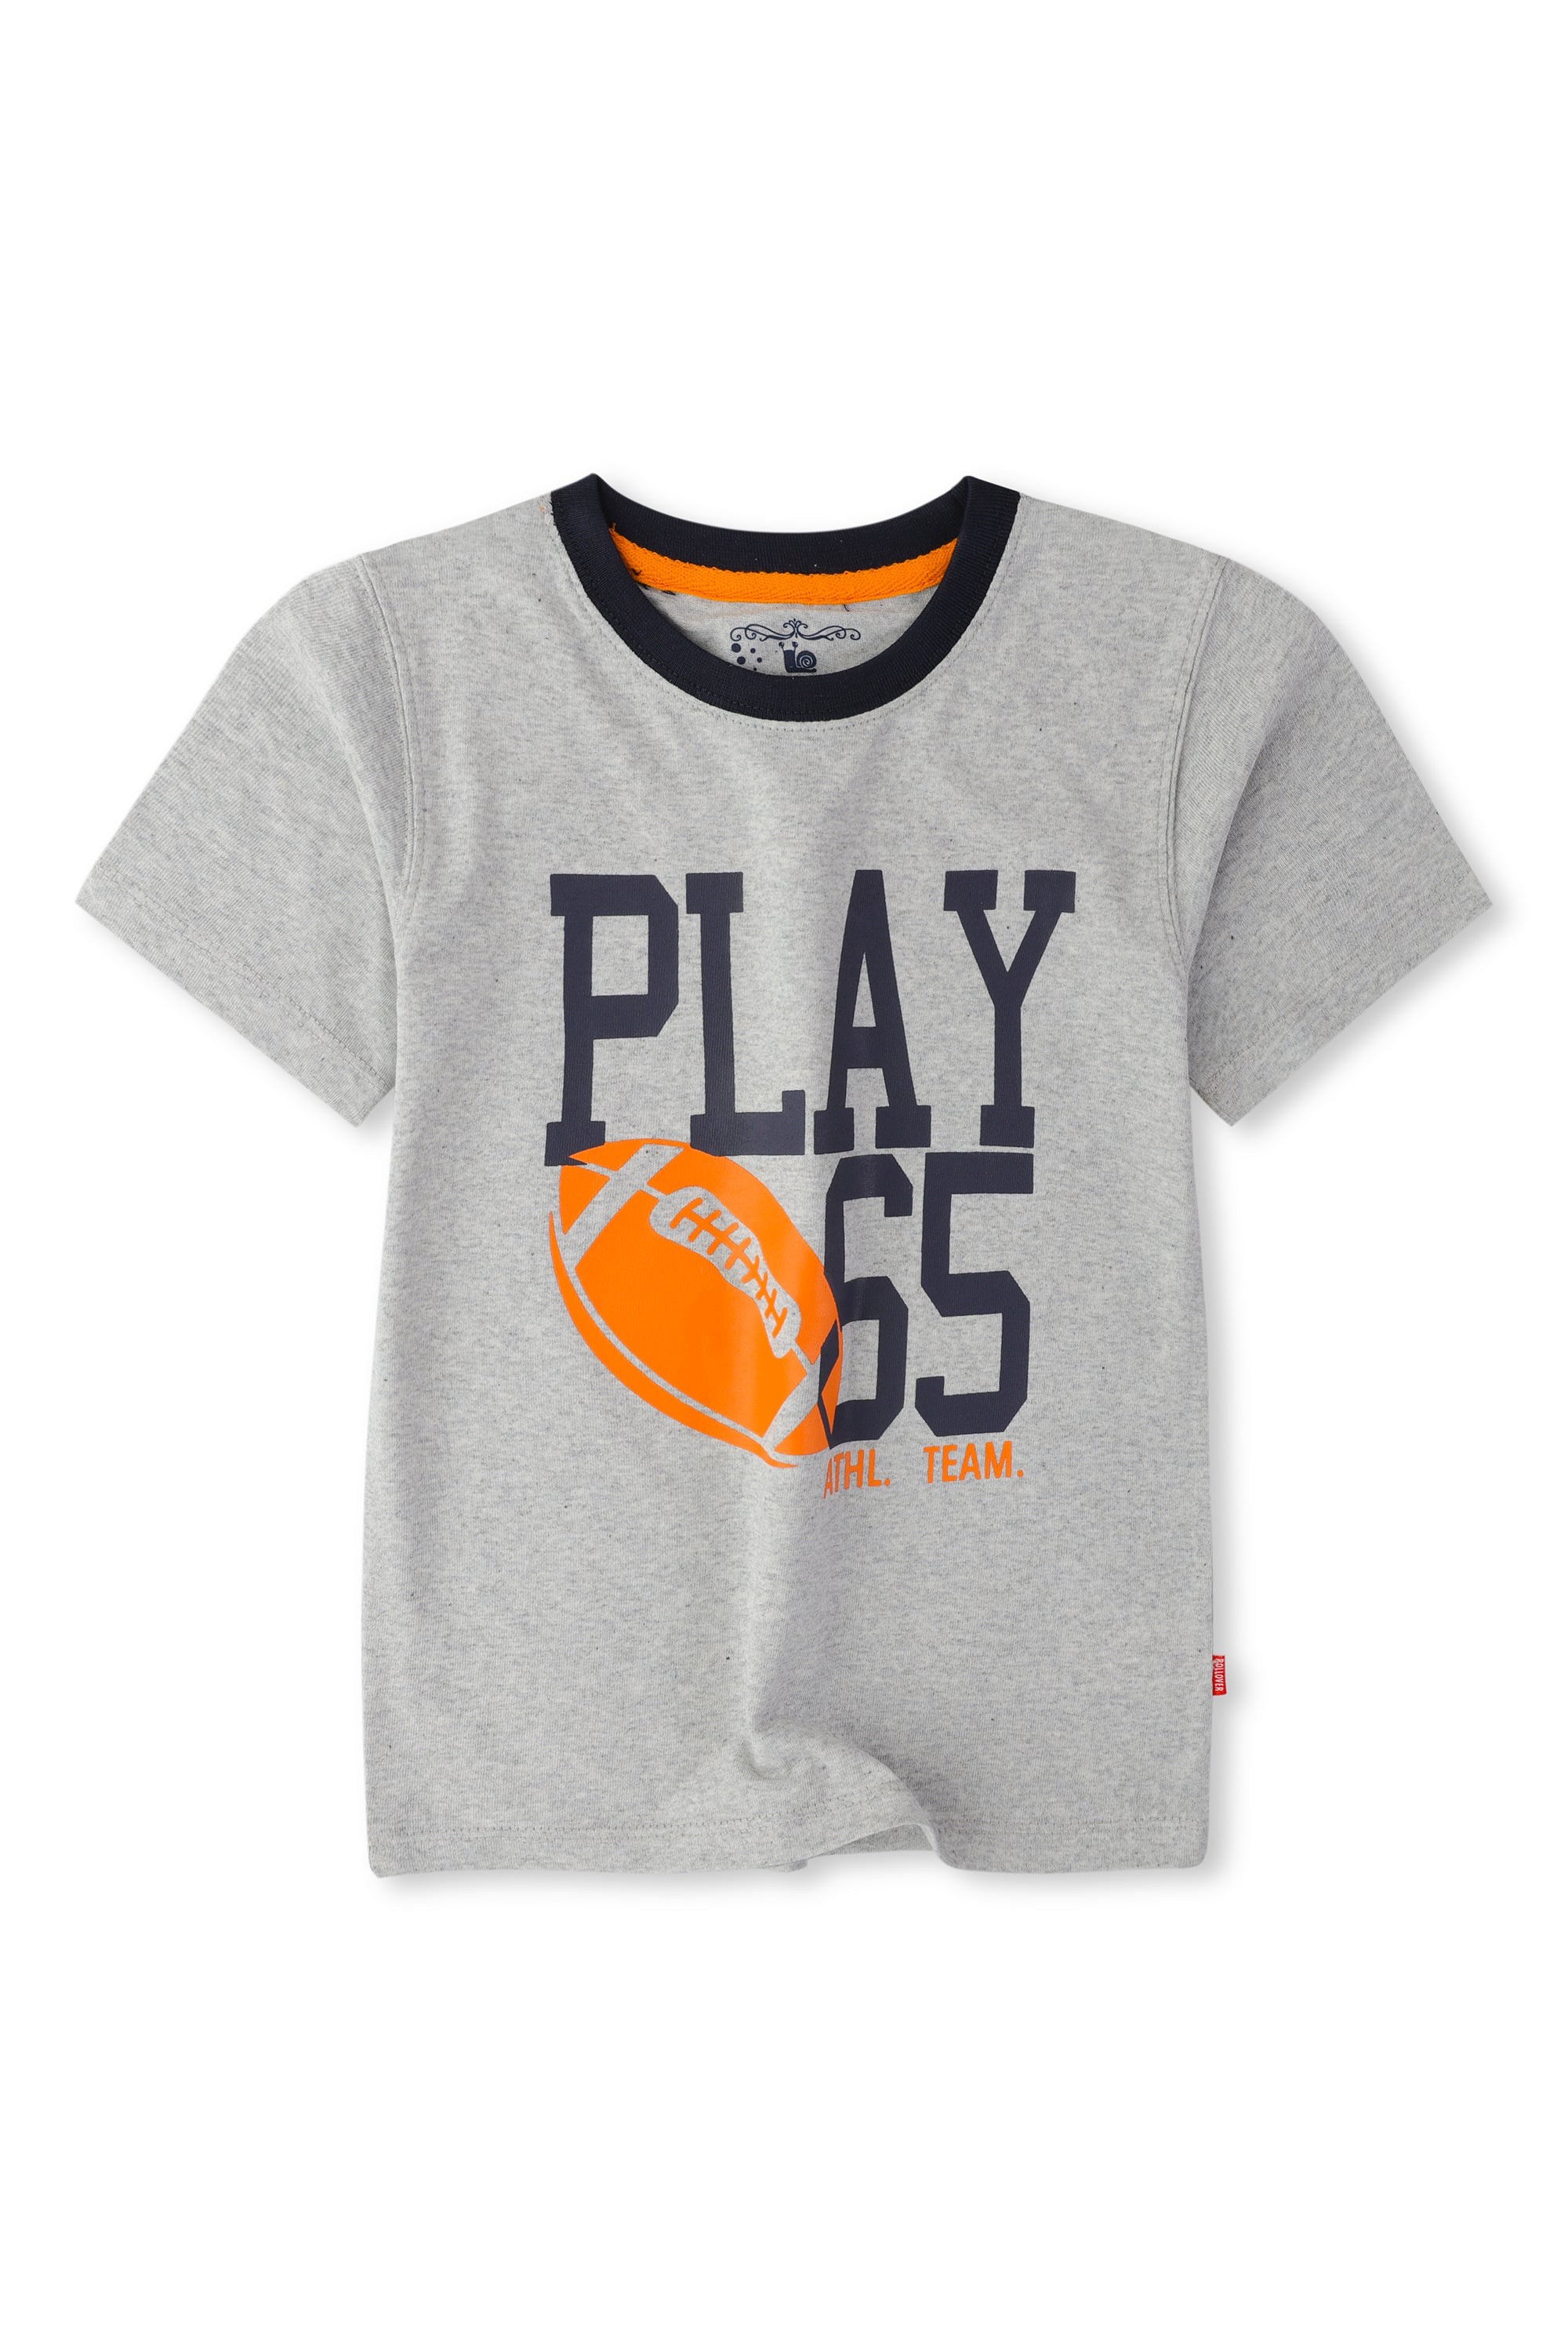 Play 65 Football T-shirt